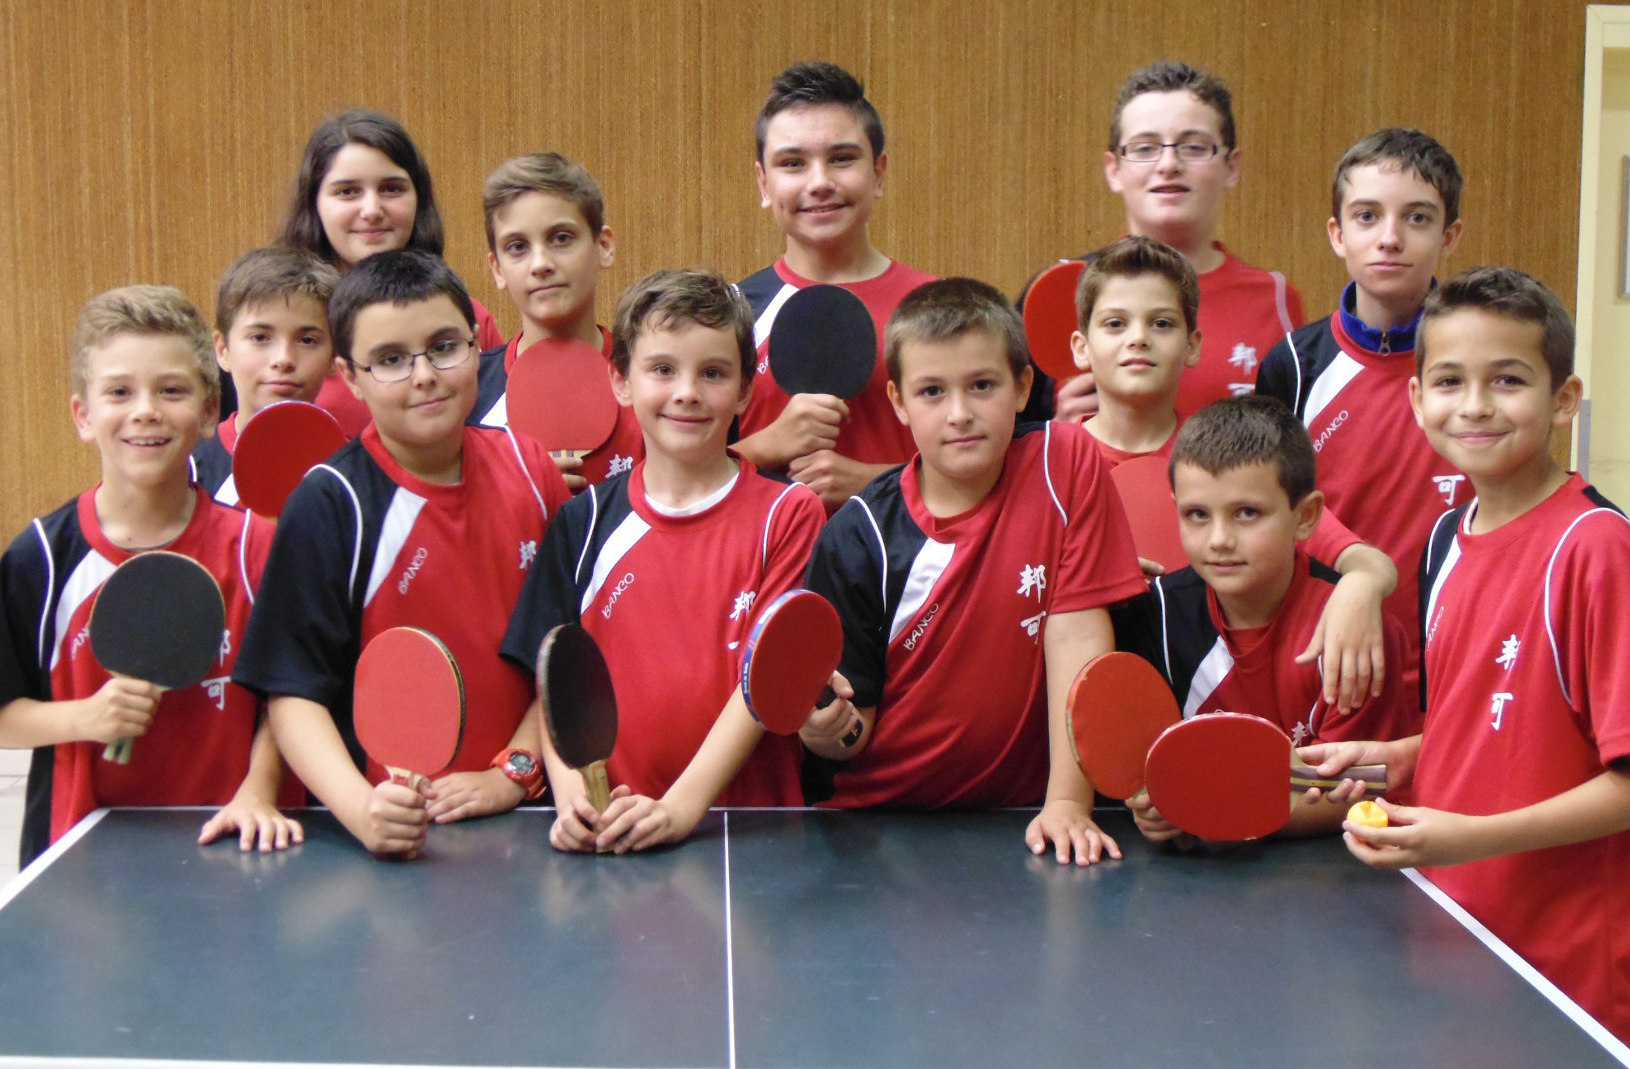 Association Sportive Tennis de Table Montbeugny Auvergne ASTTMA ASTTM